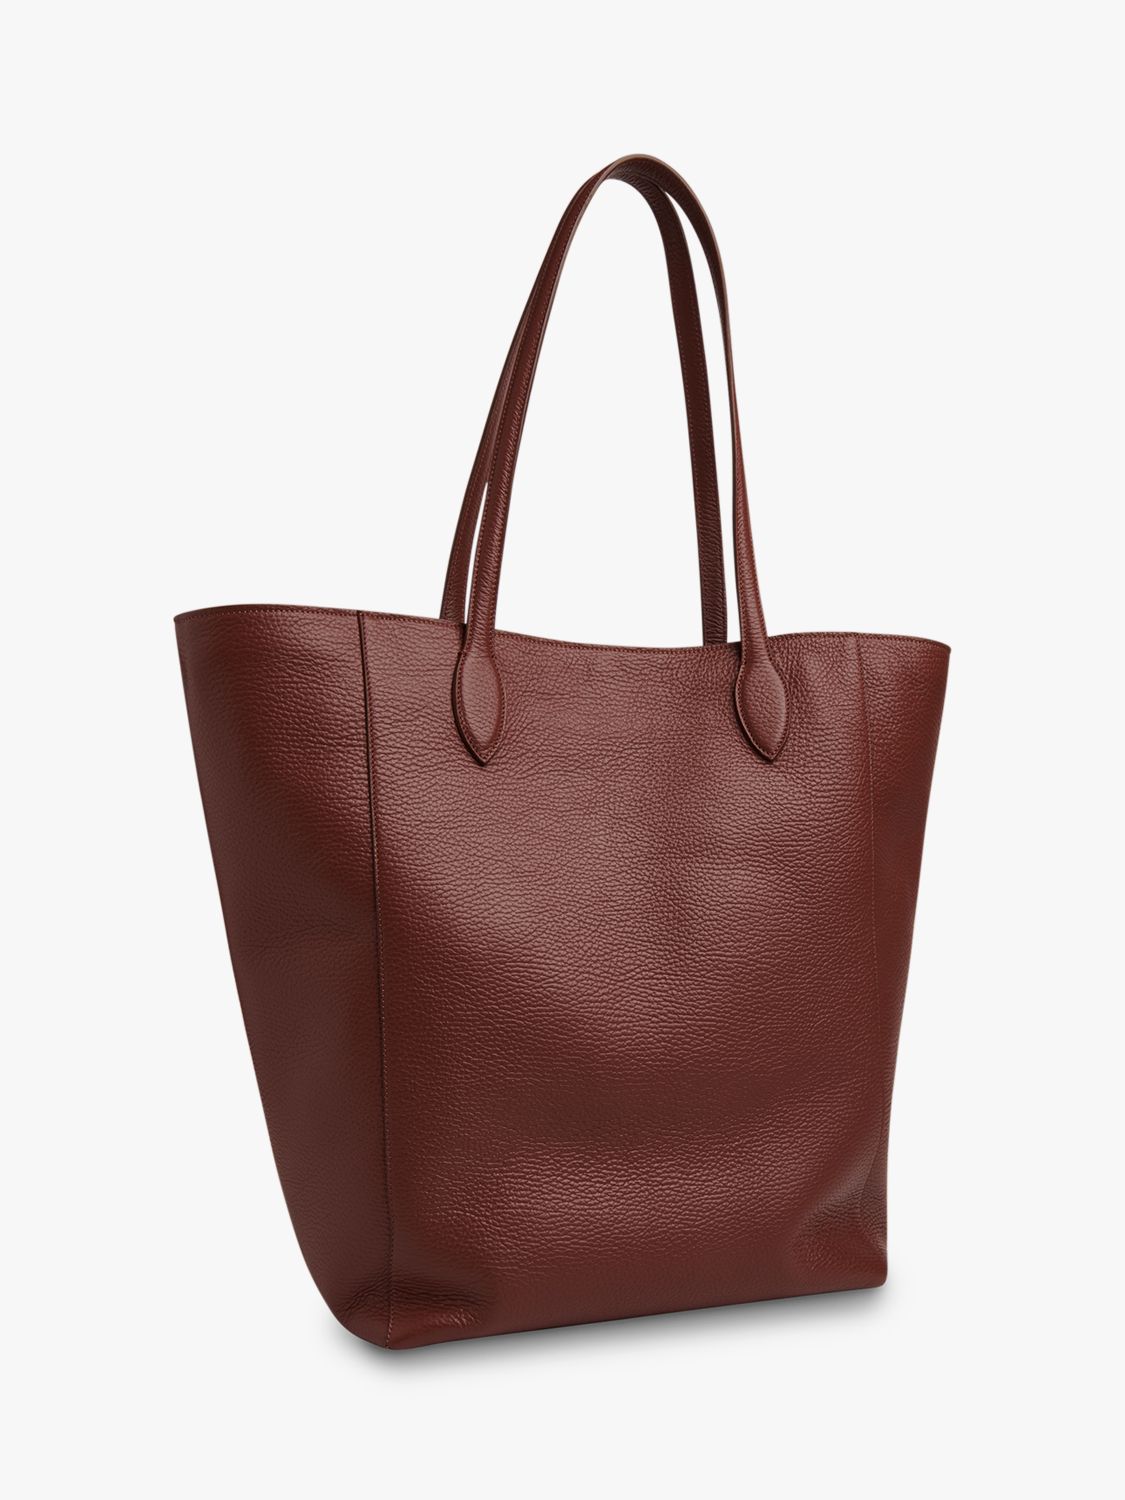 Whistles Amara Leather Tote Bag, Tan, One Size